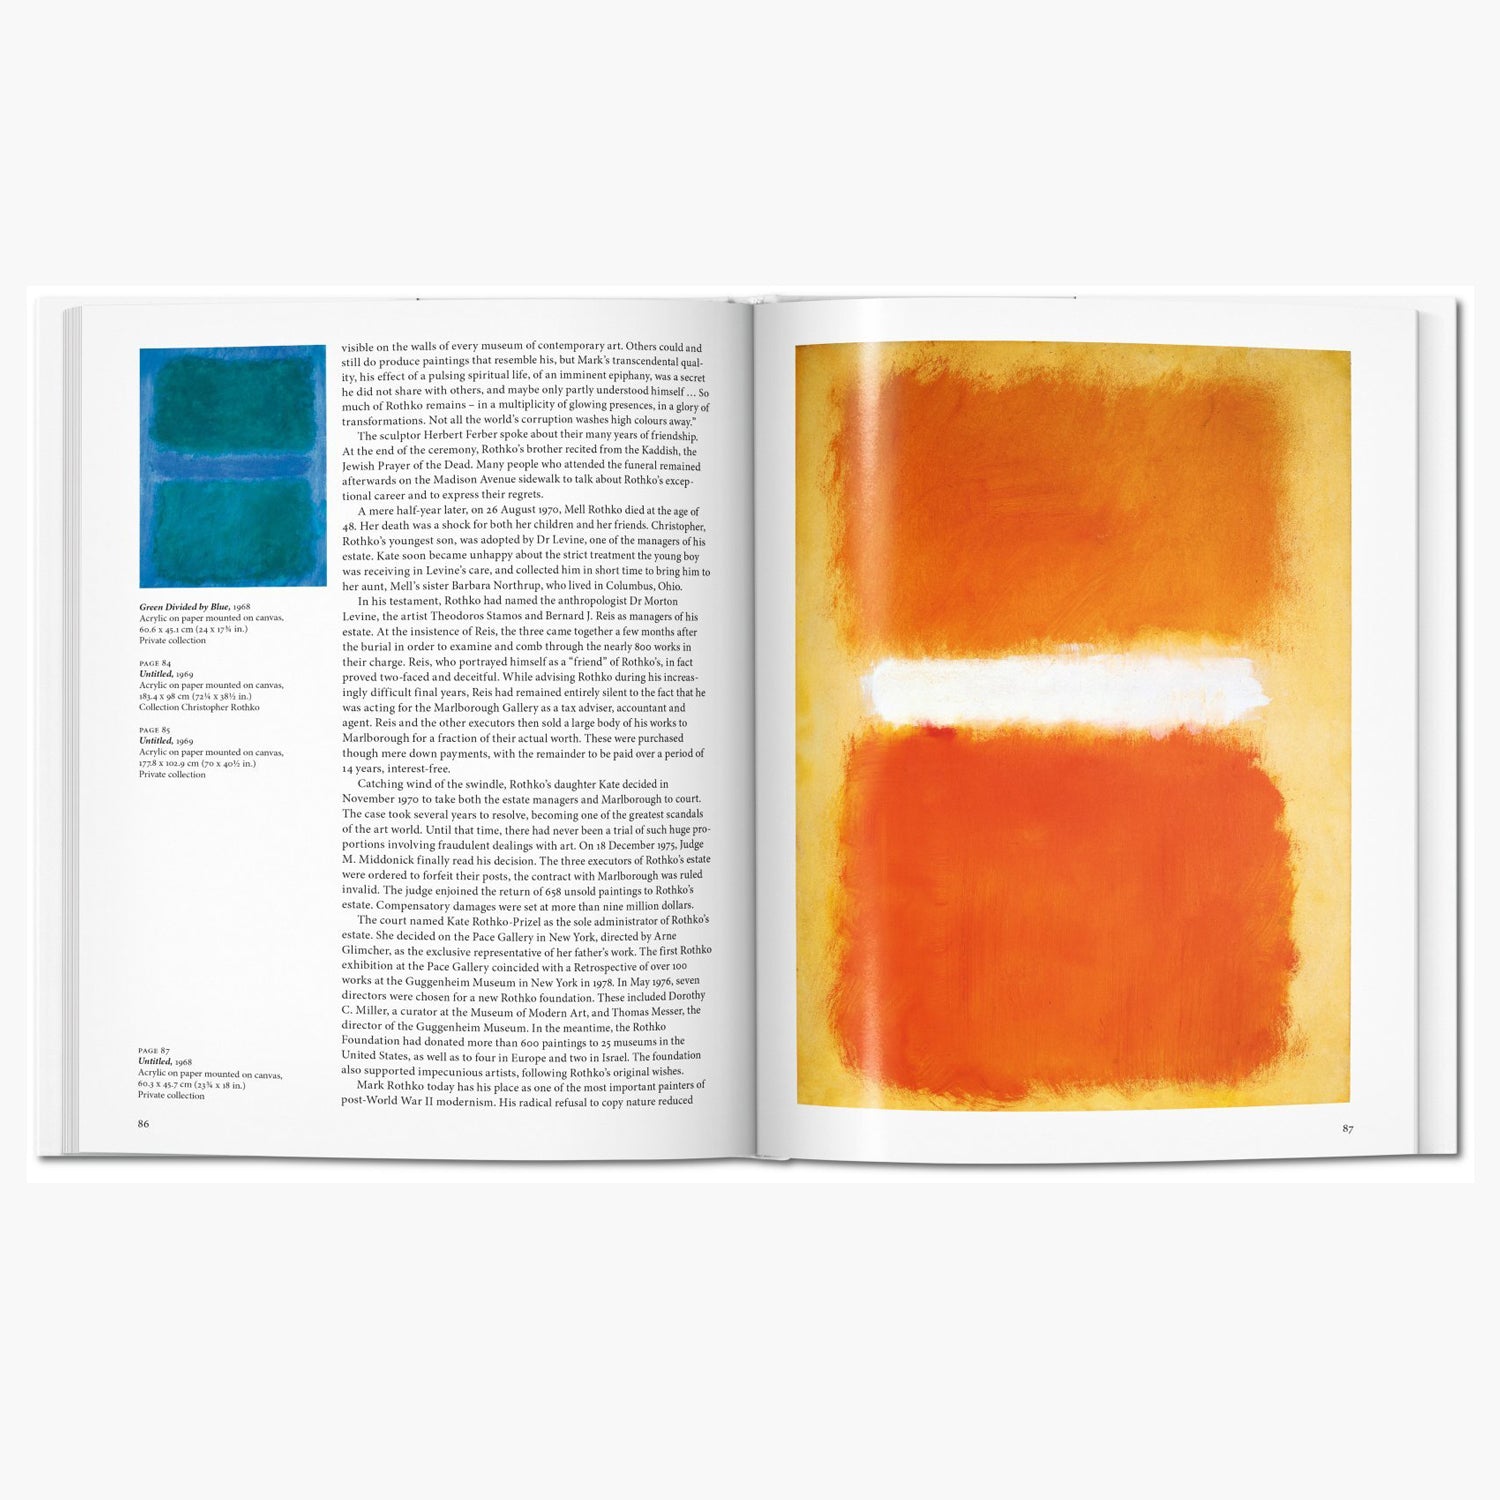 Rothko – Basic Art Series